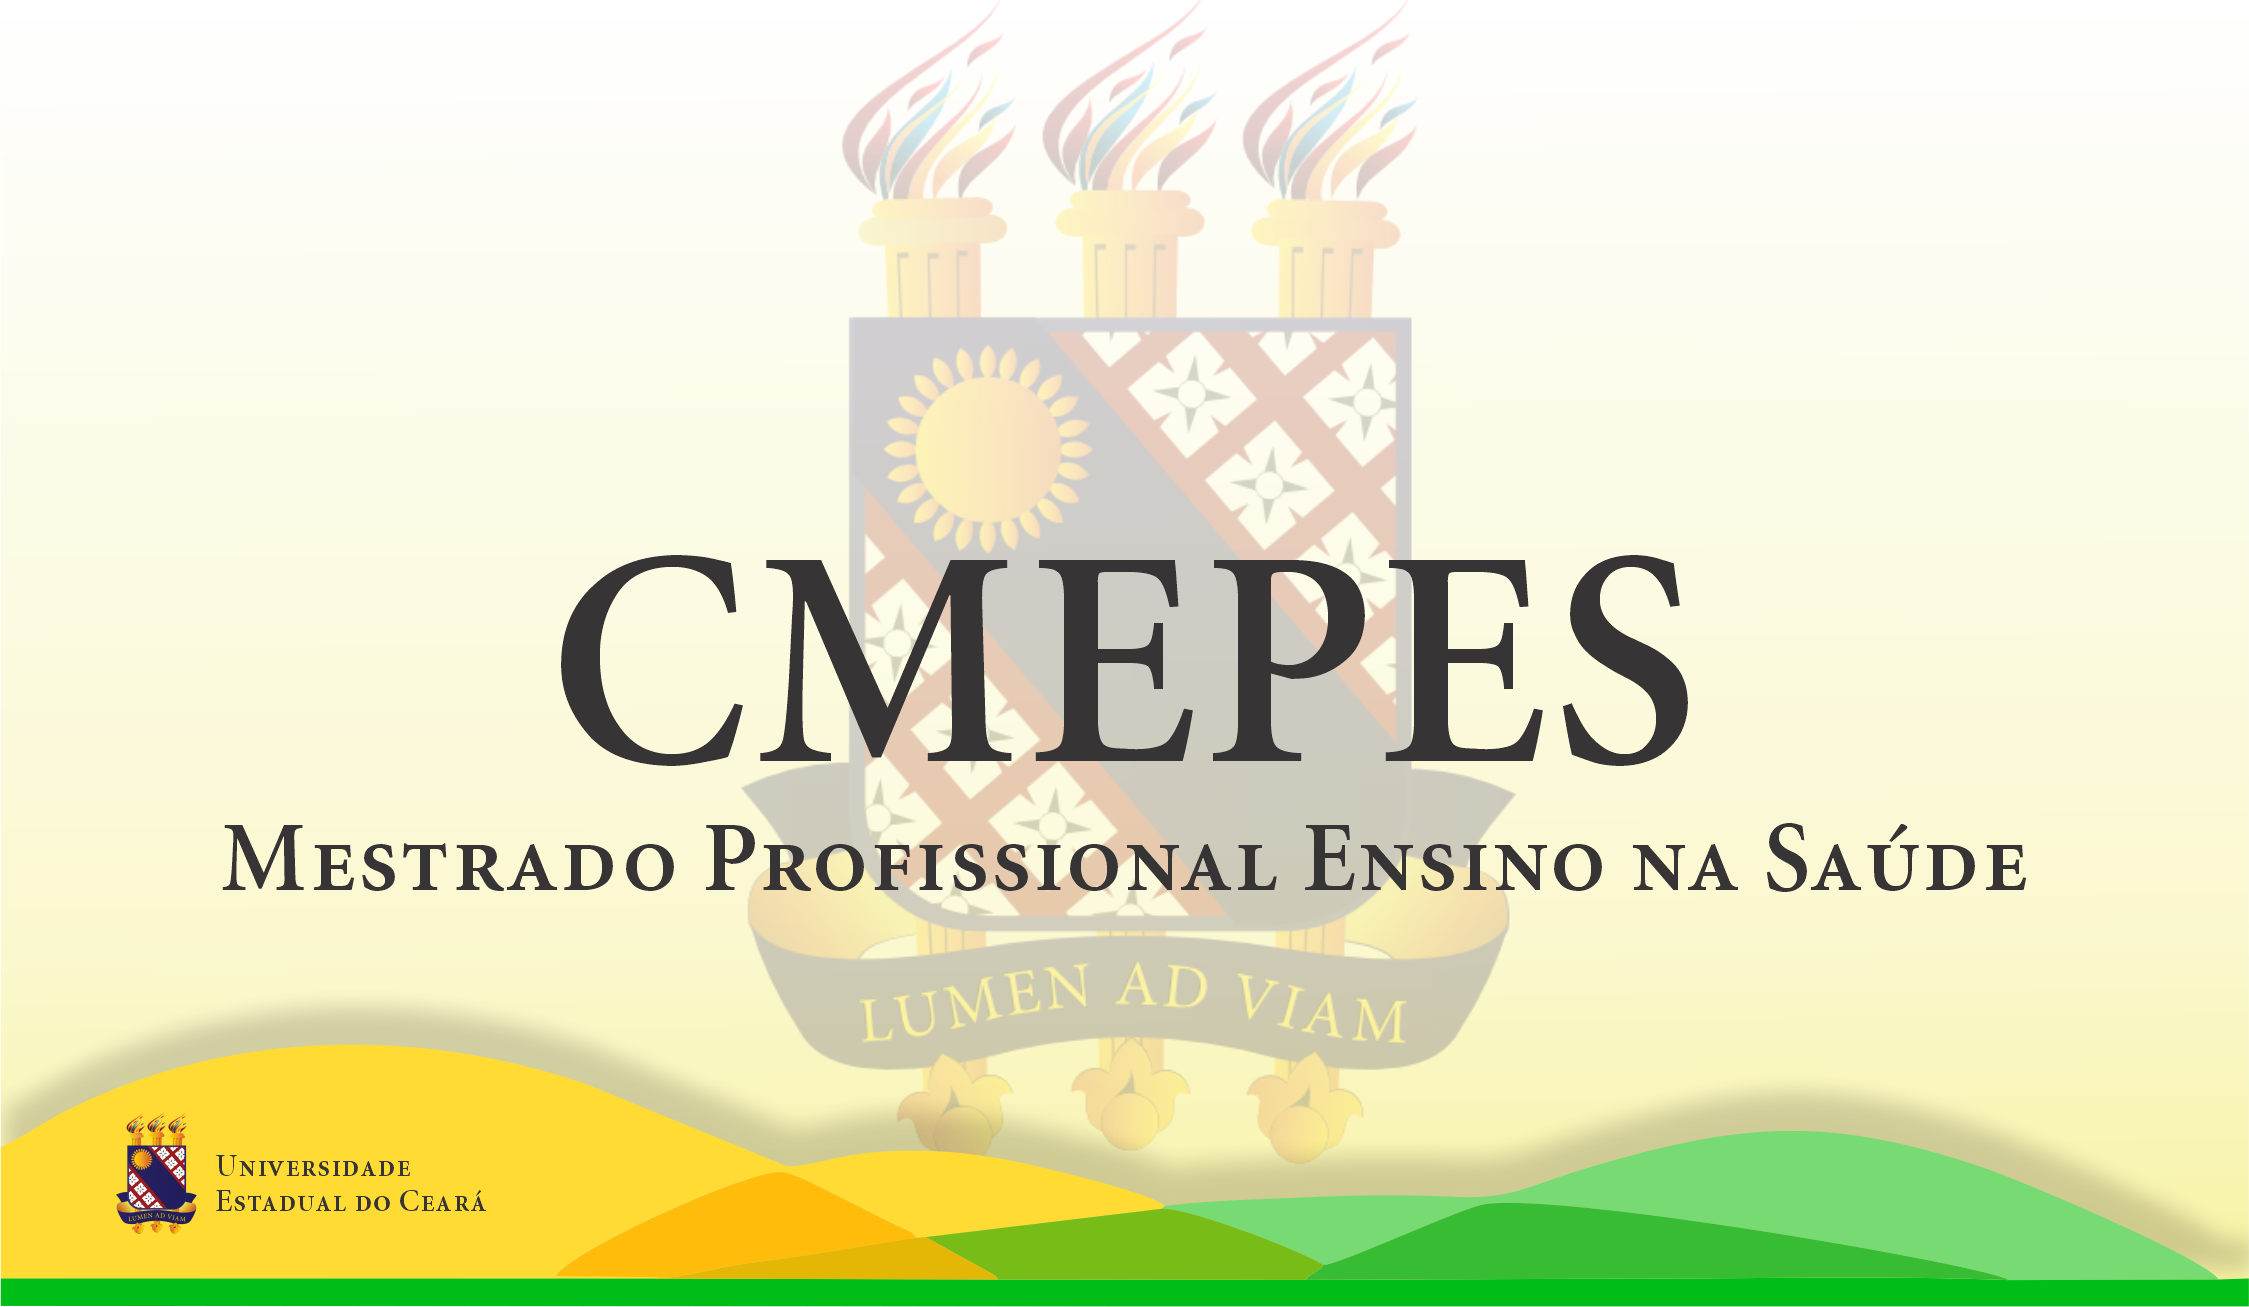 CMEPES – Mestrado Profissional Ensino na Saúde